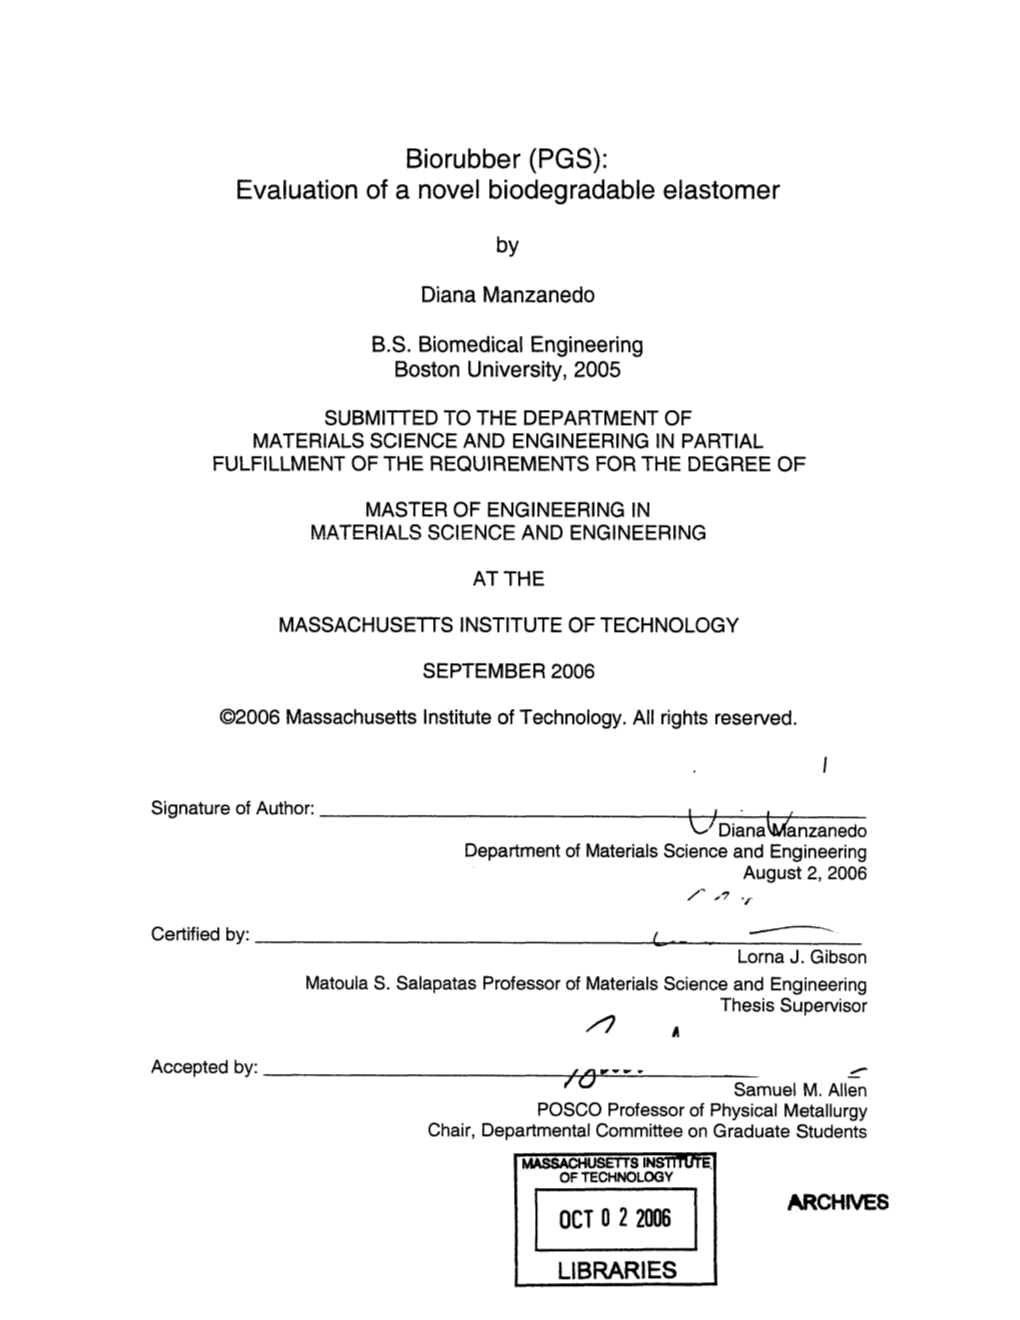 PGS): Evaluation of a Novel Biodegradable Elastomer